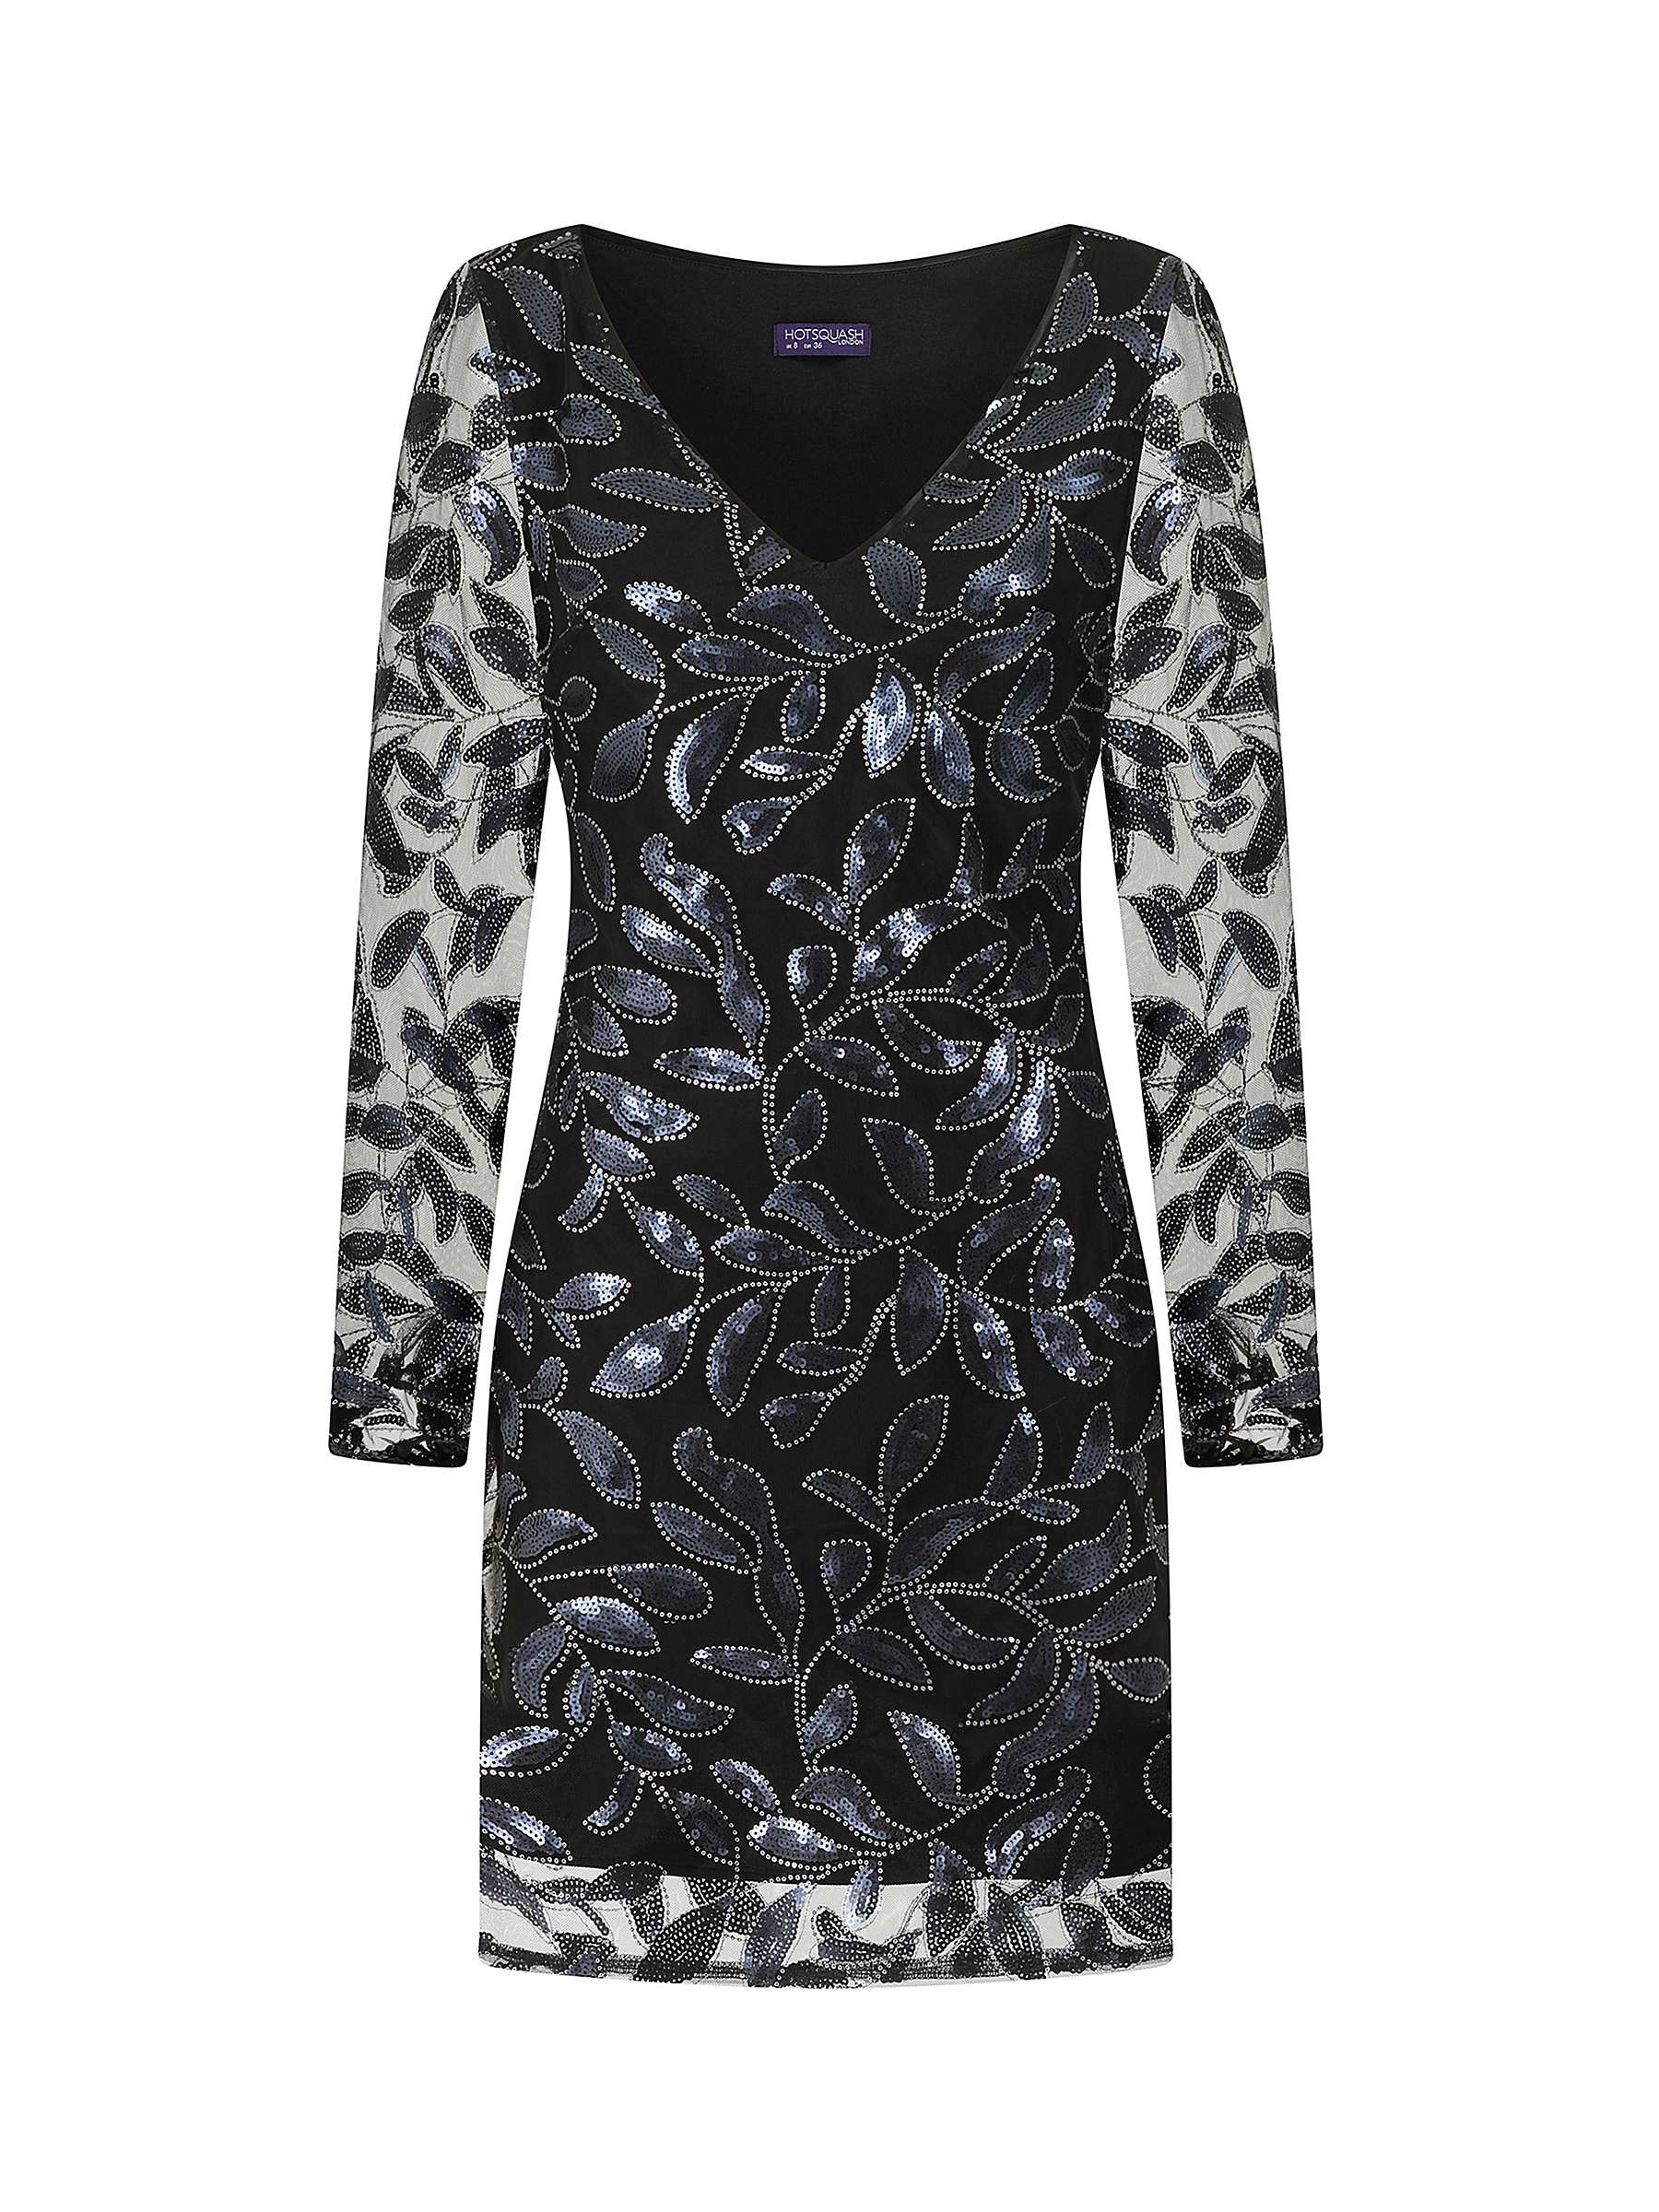 Buy HotSquash Sequin Leaf Embroidery Shift Dress, Black Online at johnlewis.com